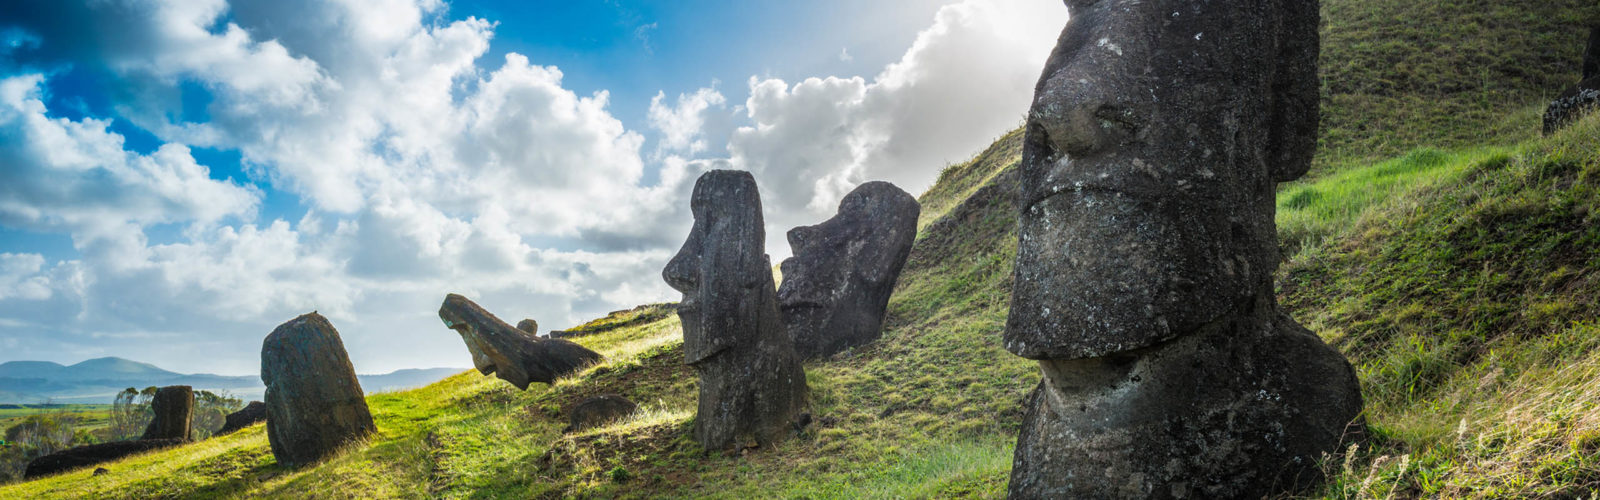 easter-island-moai-statues